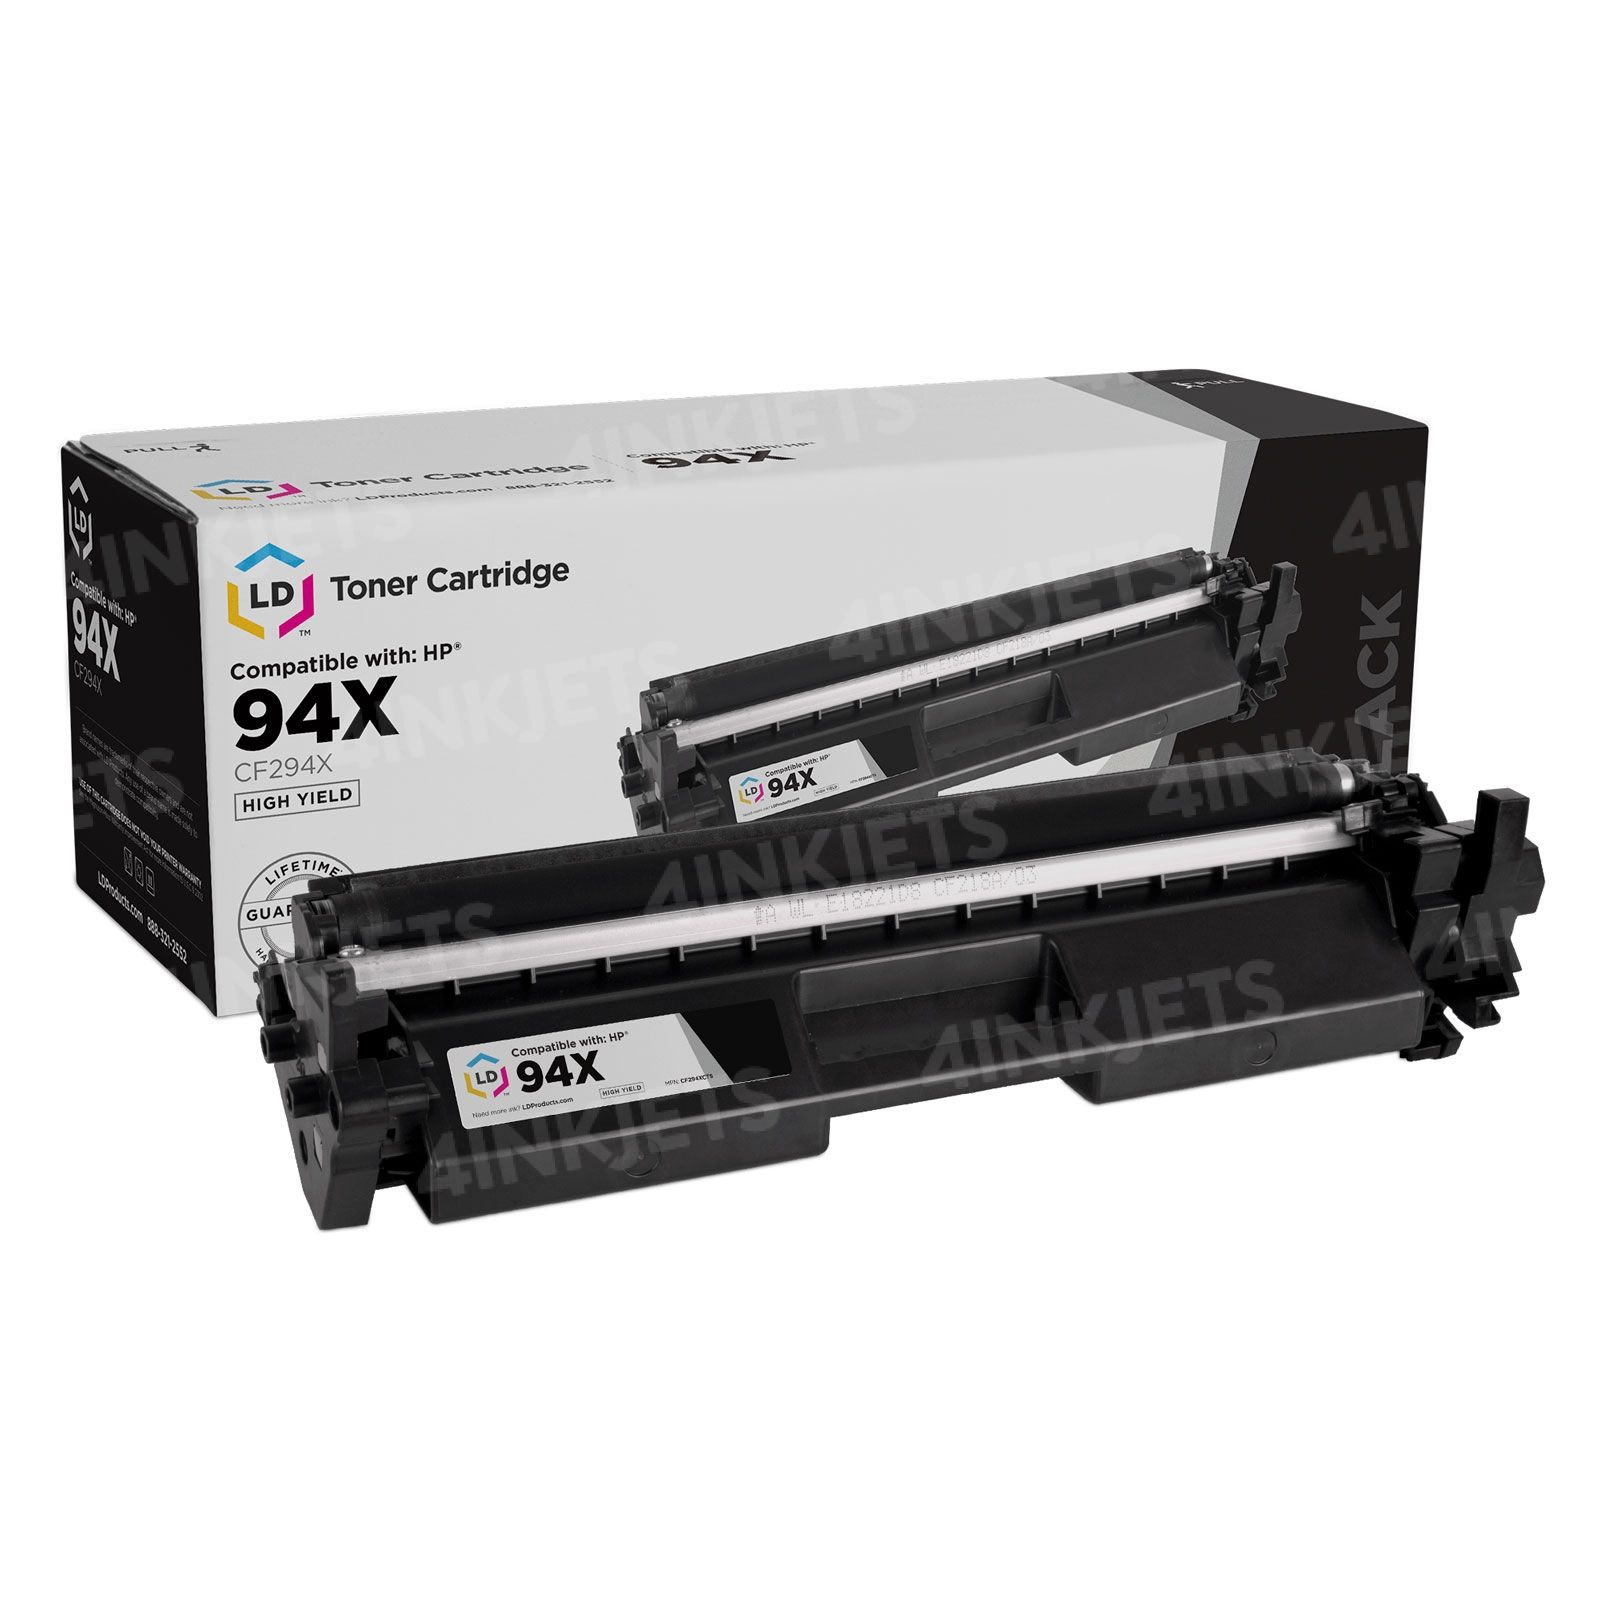 Genuine HP (94X) High Yield LaserJet Black Toner Cartridge